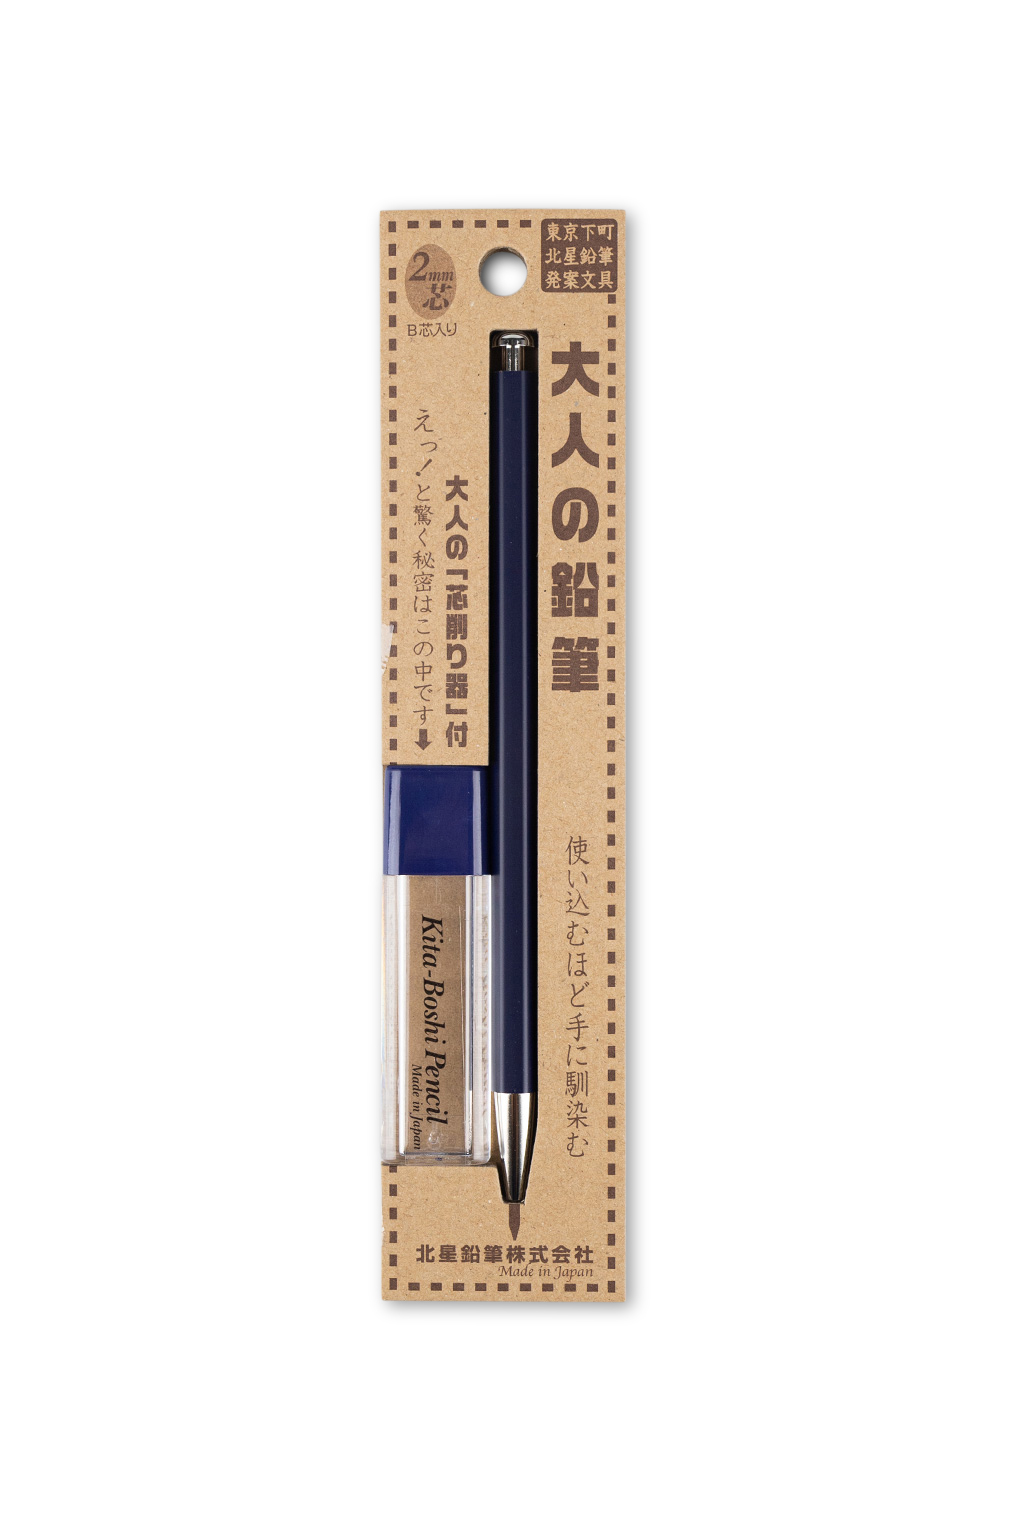 BlueButtonShop - Kitaboshi Pencil - Kitaboshi -Pencil-Grown-up-Pencil-2mmSharpener-set-in-4-Color-Choices-OTP-680